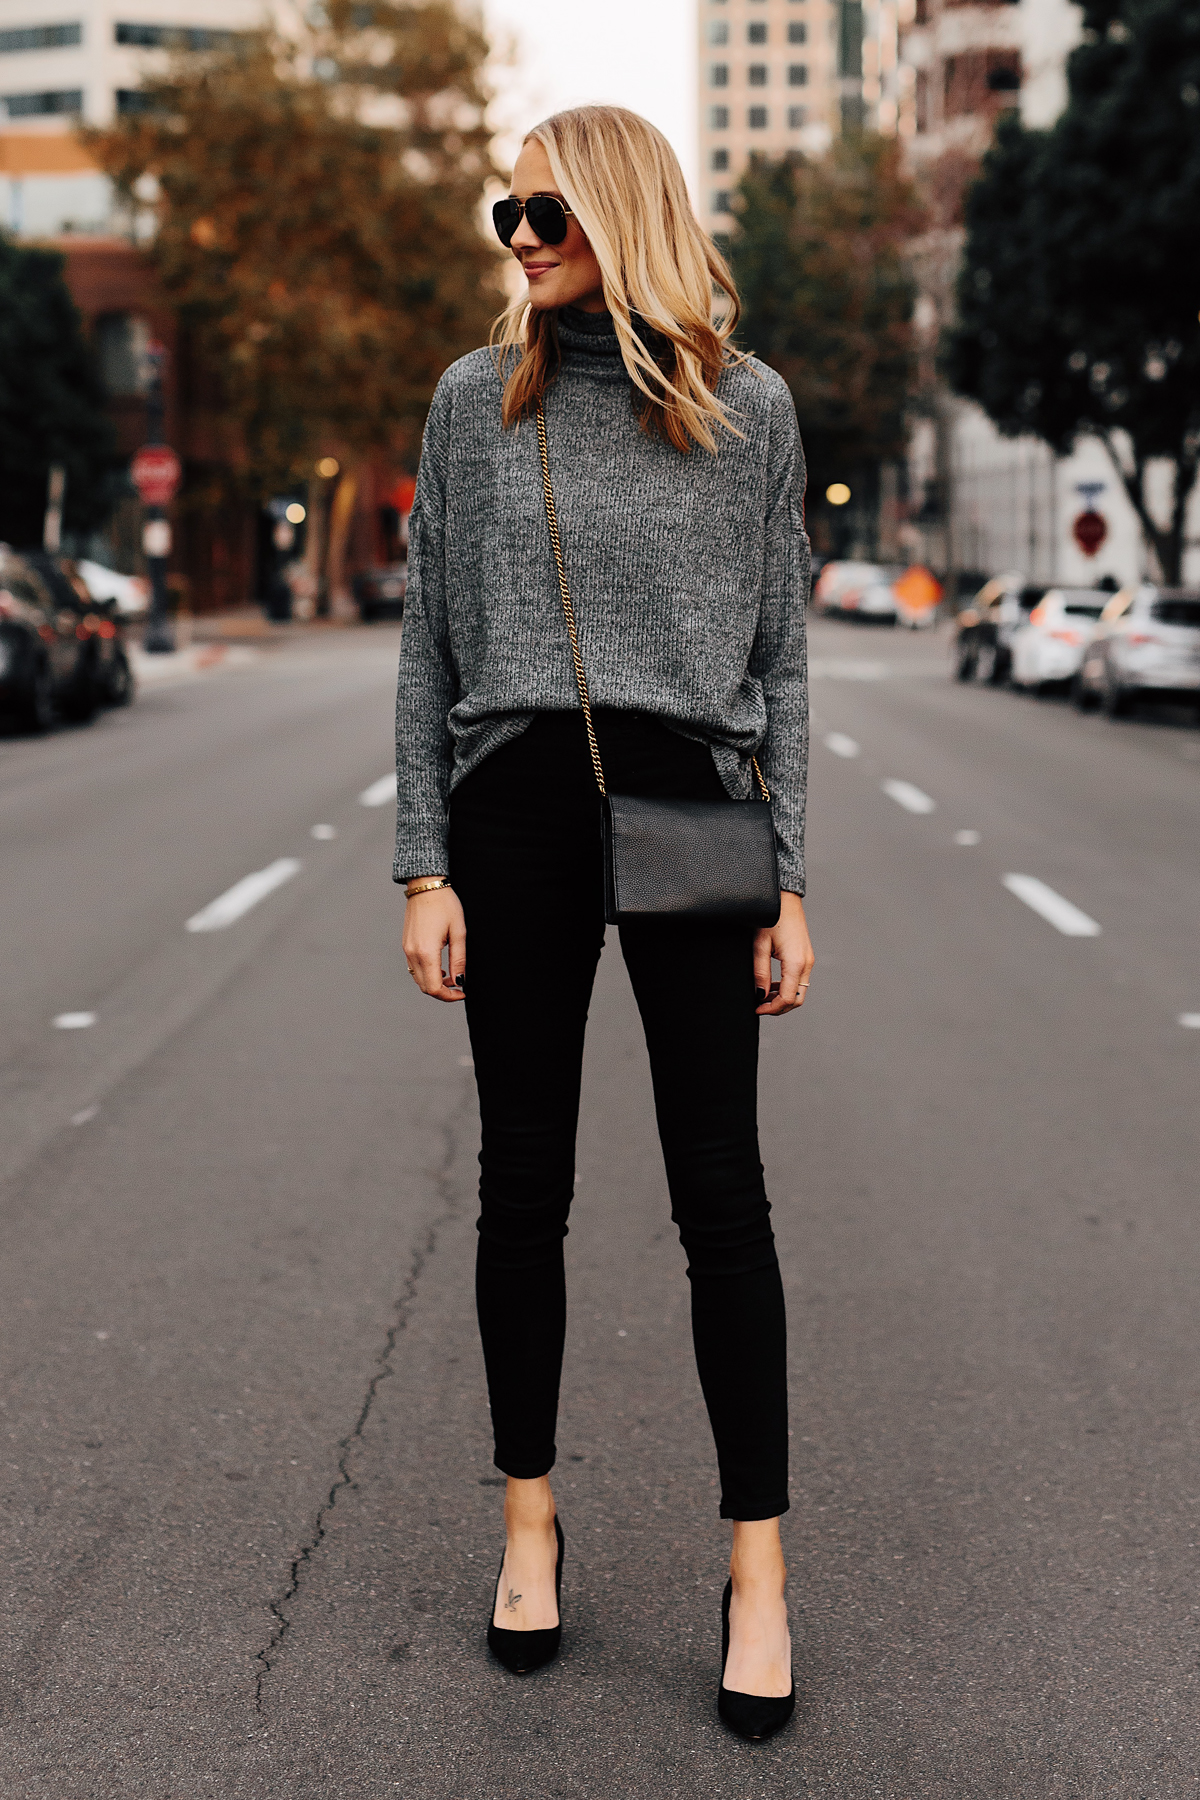 Blonde Woman Wearing Grey Turtleneck Top Black Skinny Jeans Black Pumps Outfit Fashion Jackson San Diego Fashion Blogger Street Style